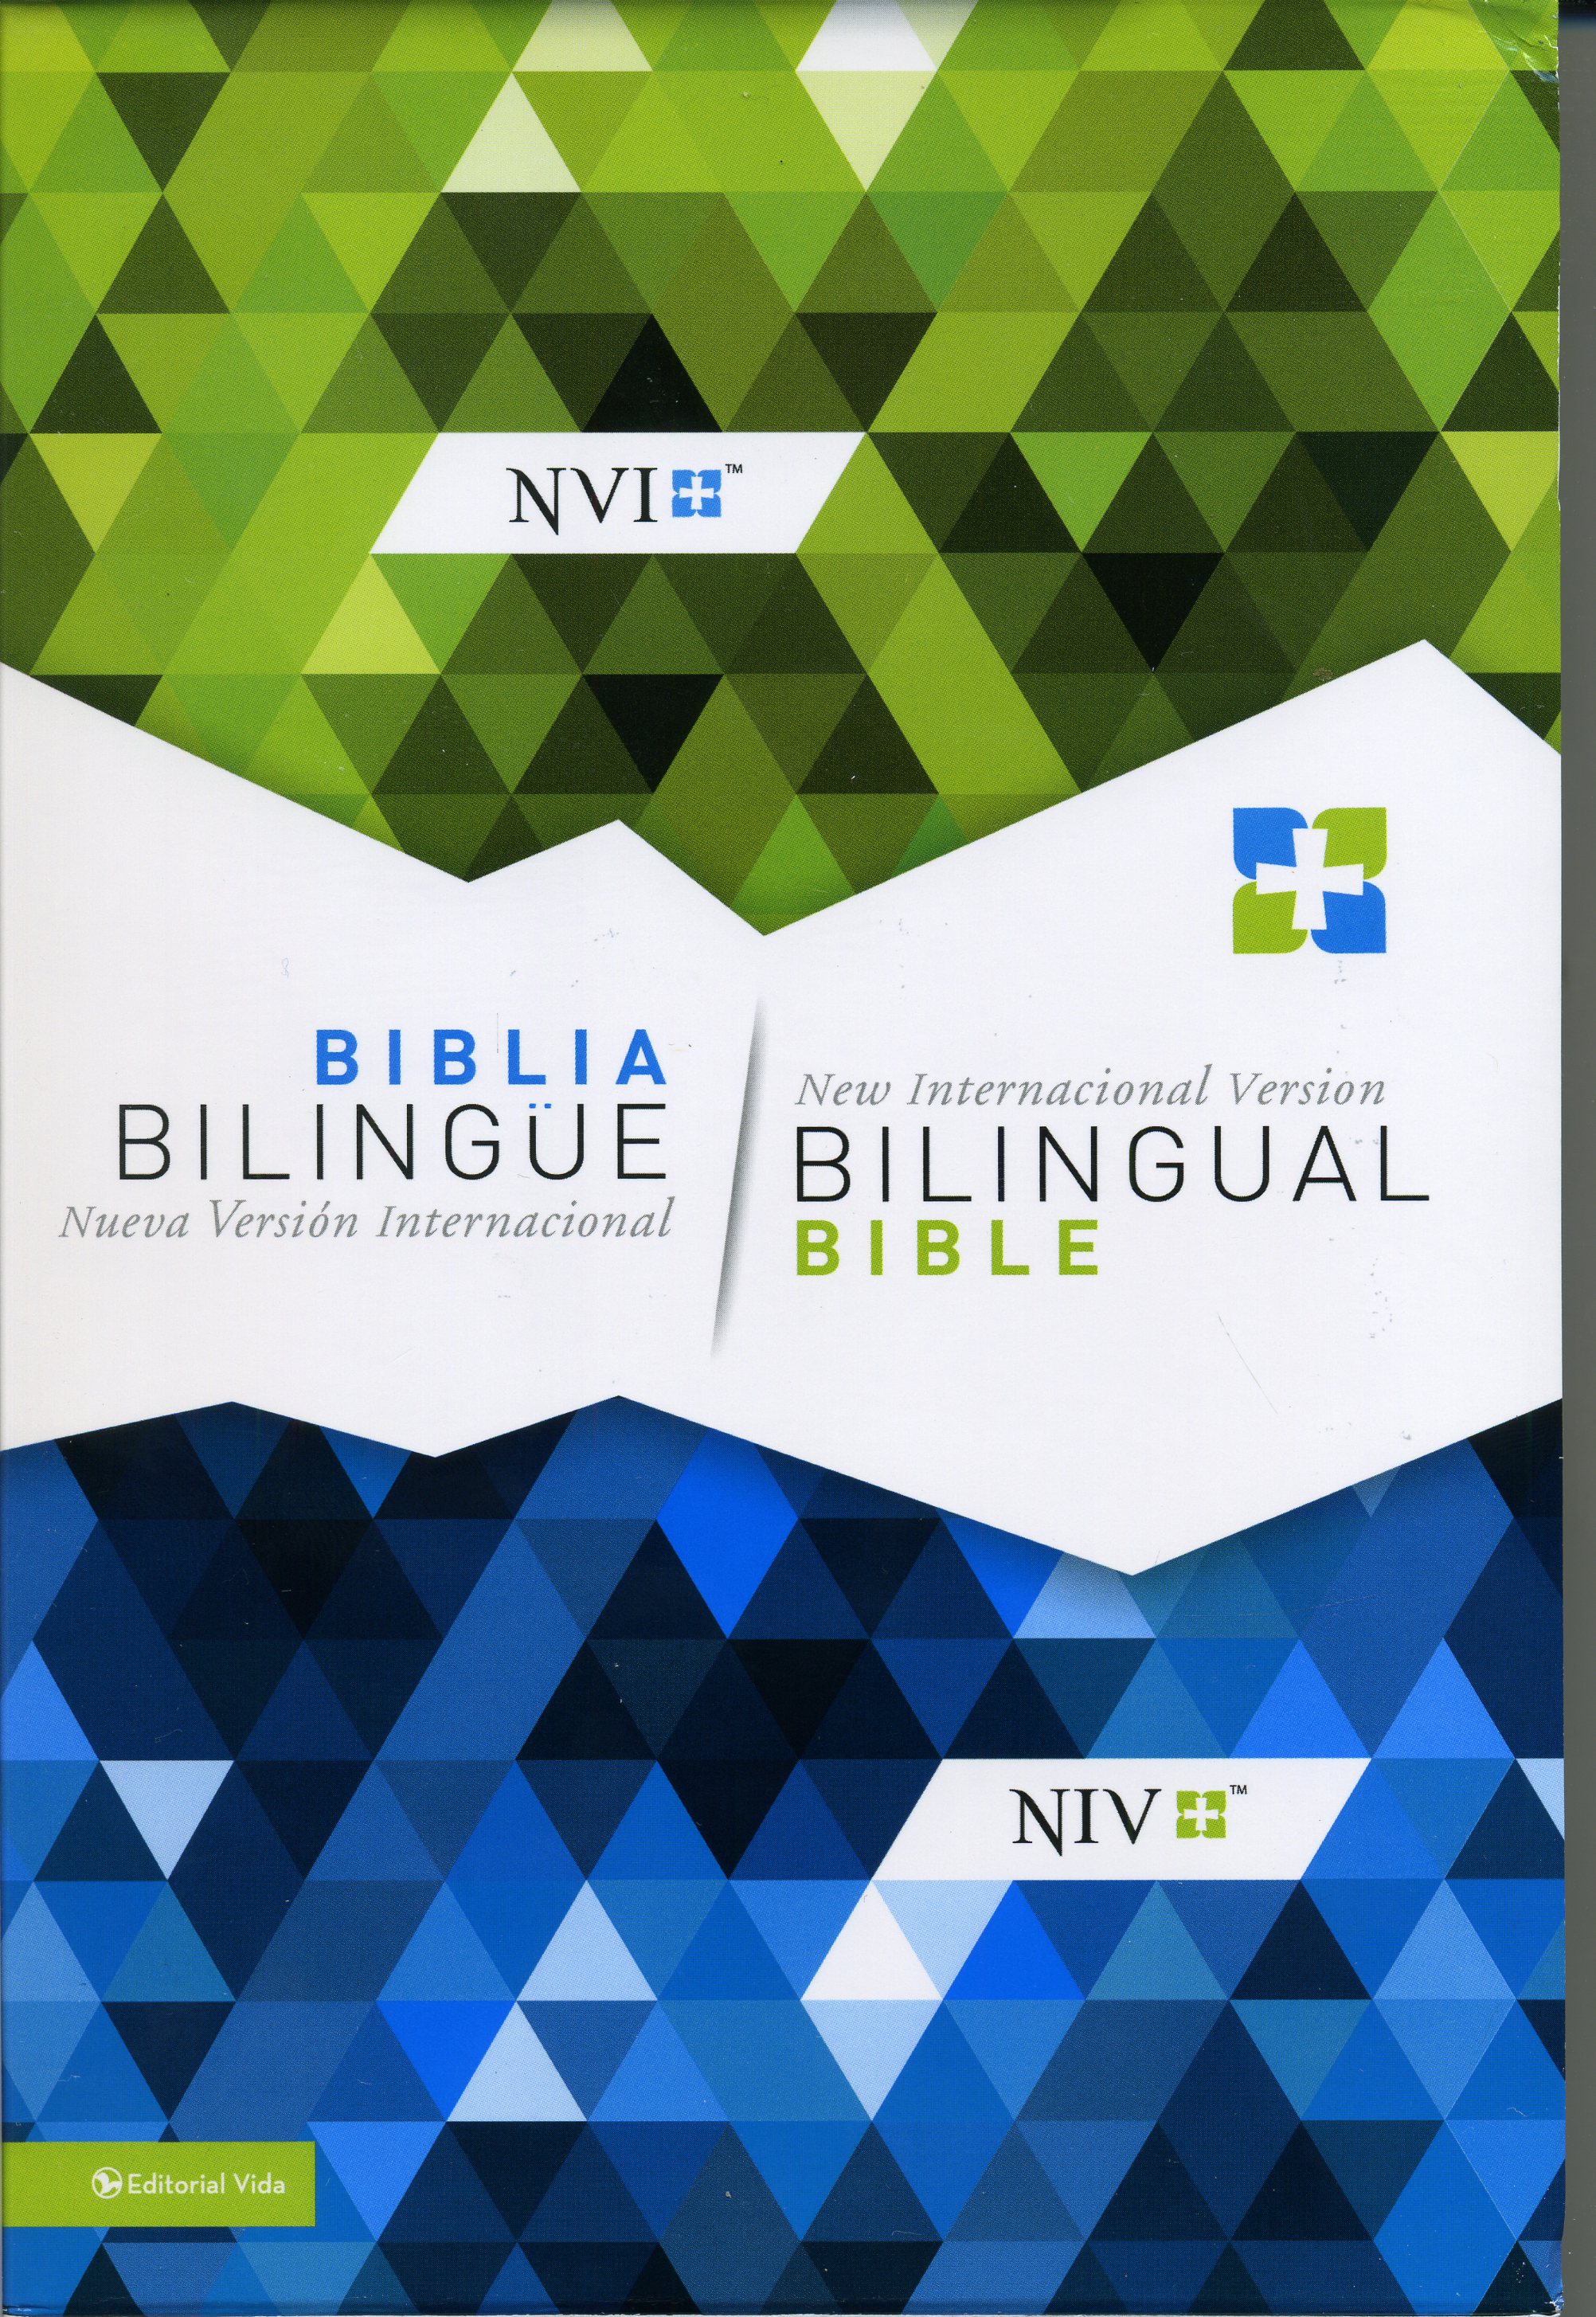 Biblia bilingüe / Bilingual Bible